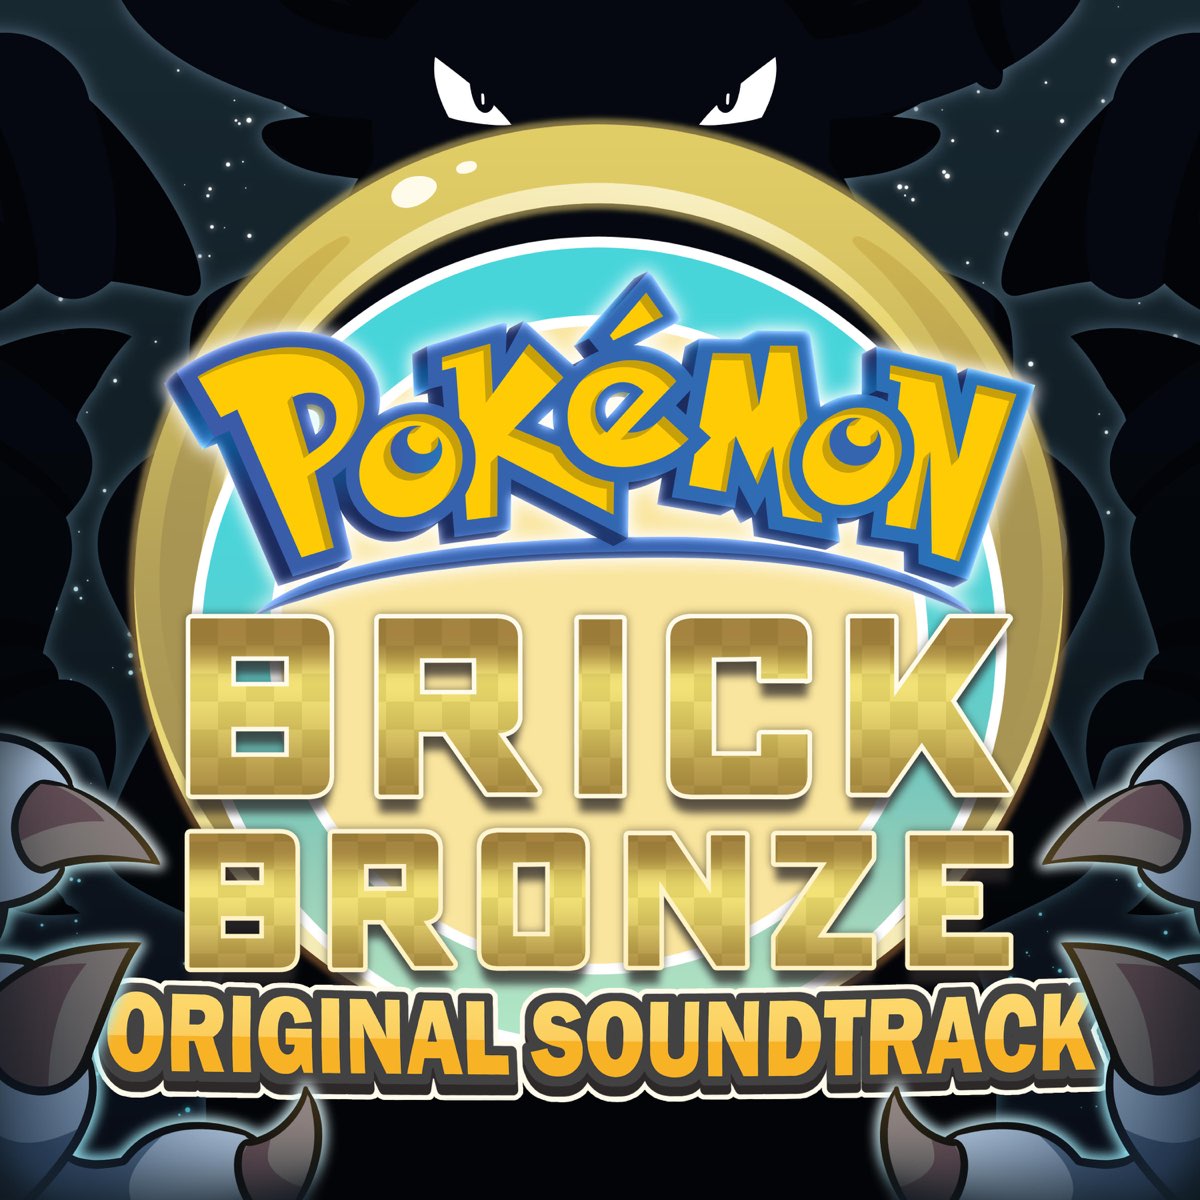 Pokemon brick bronze EP 001 - Free stories online. Create books